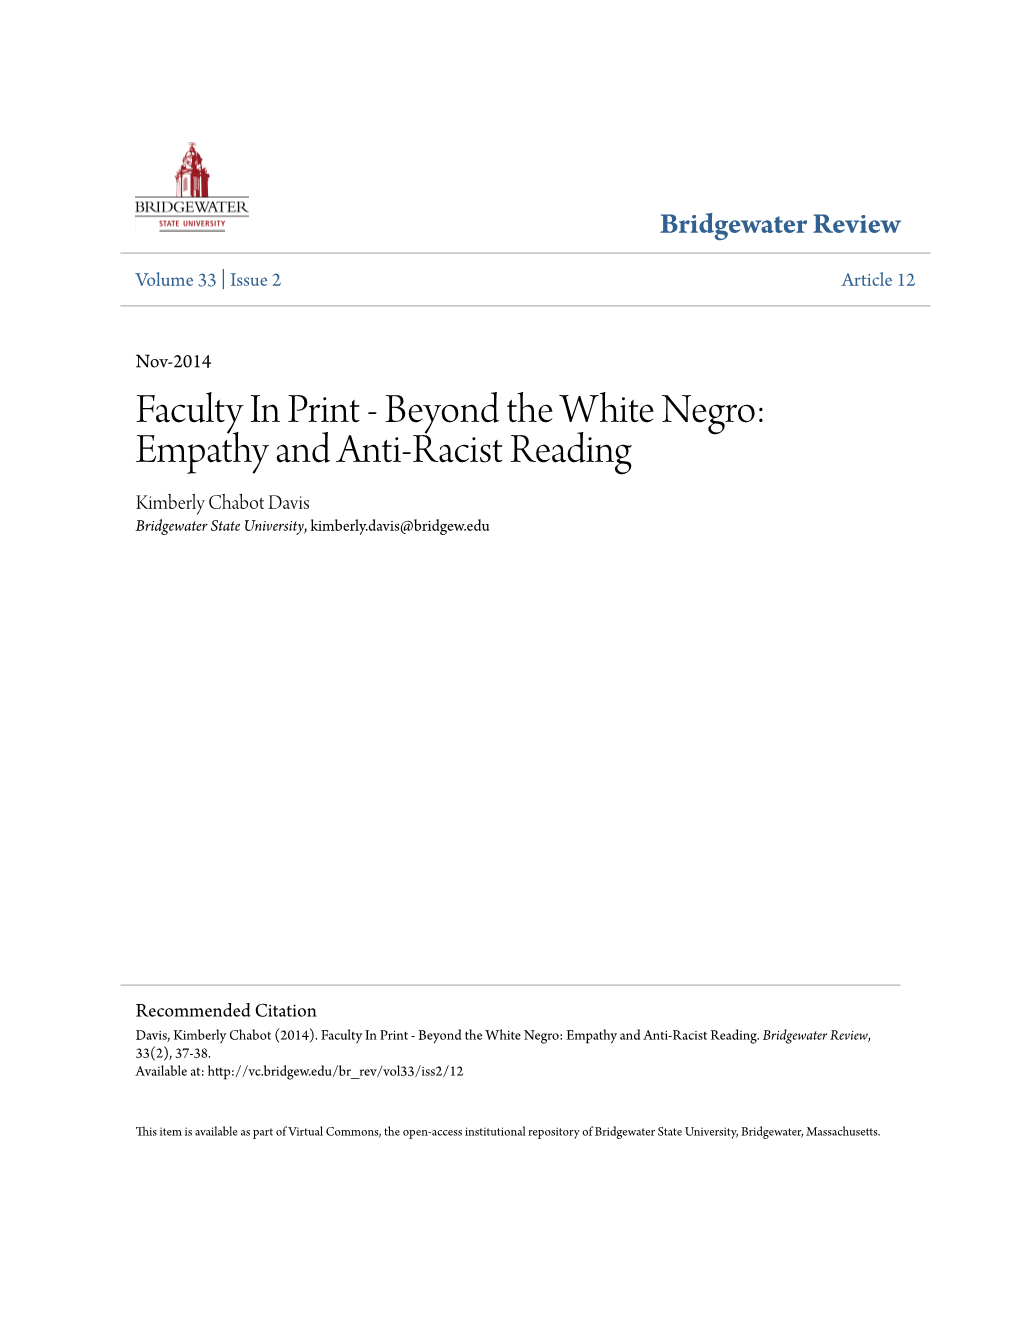 Beyond the White Negro: Empathy and Anti-Racist Reading Kimberly Chabot Davis Bridgewater State University, Kimberly.Davis@Bridgew.Edu